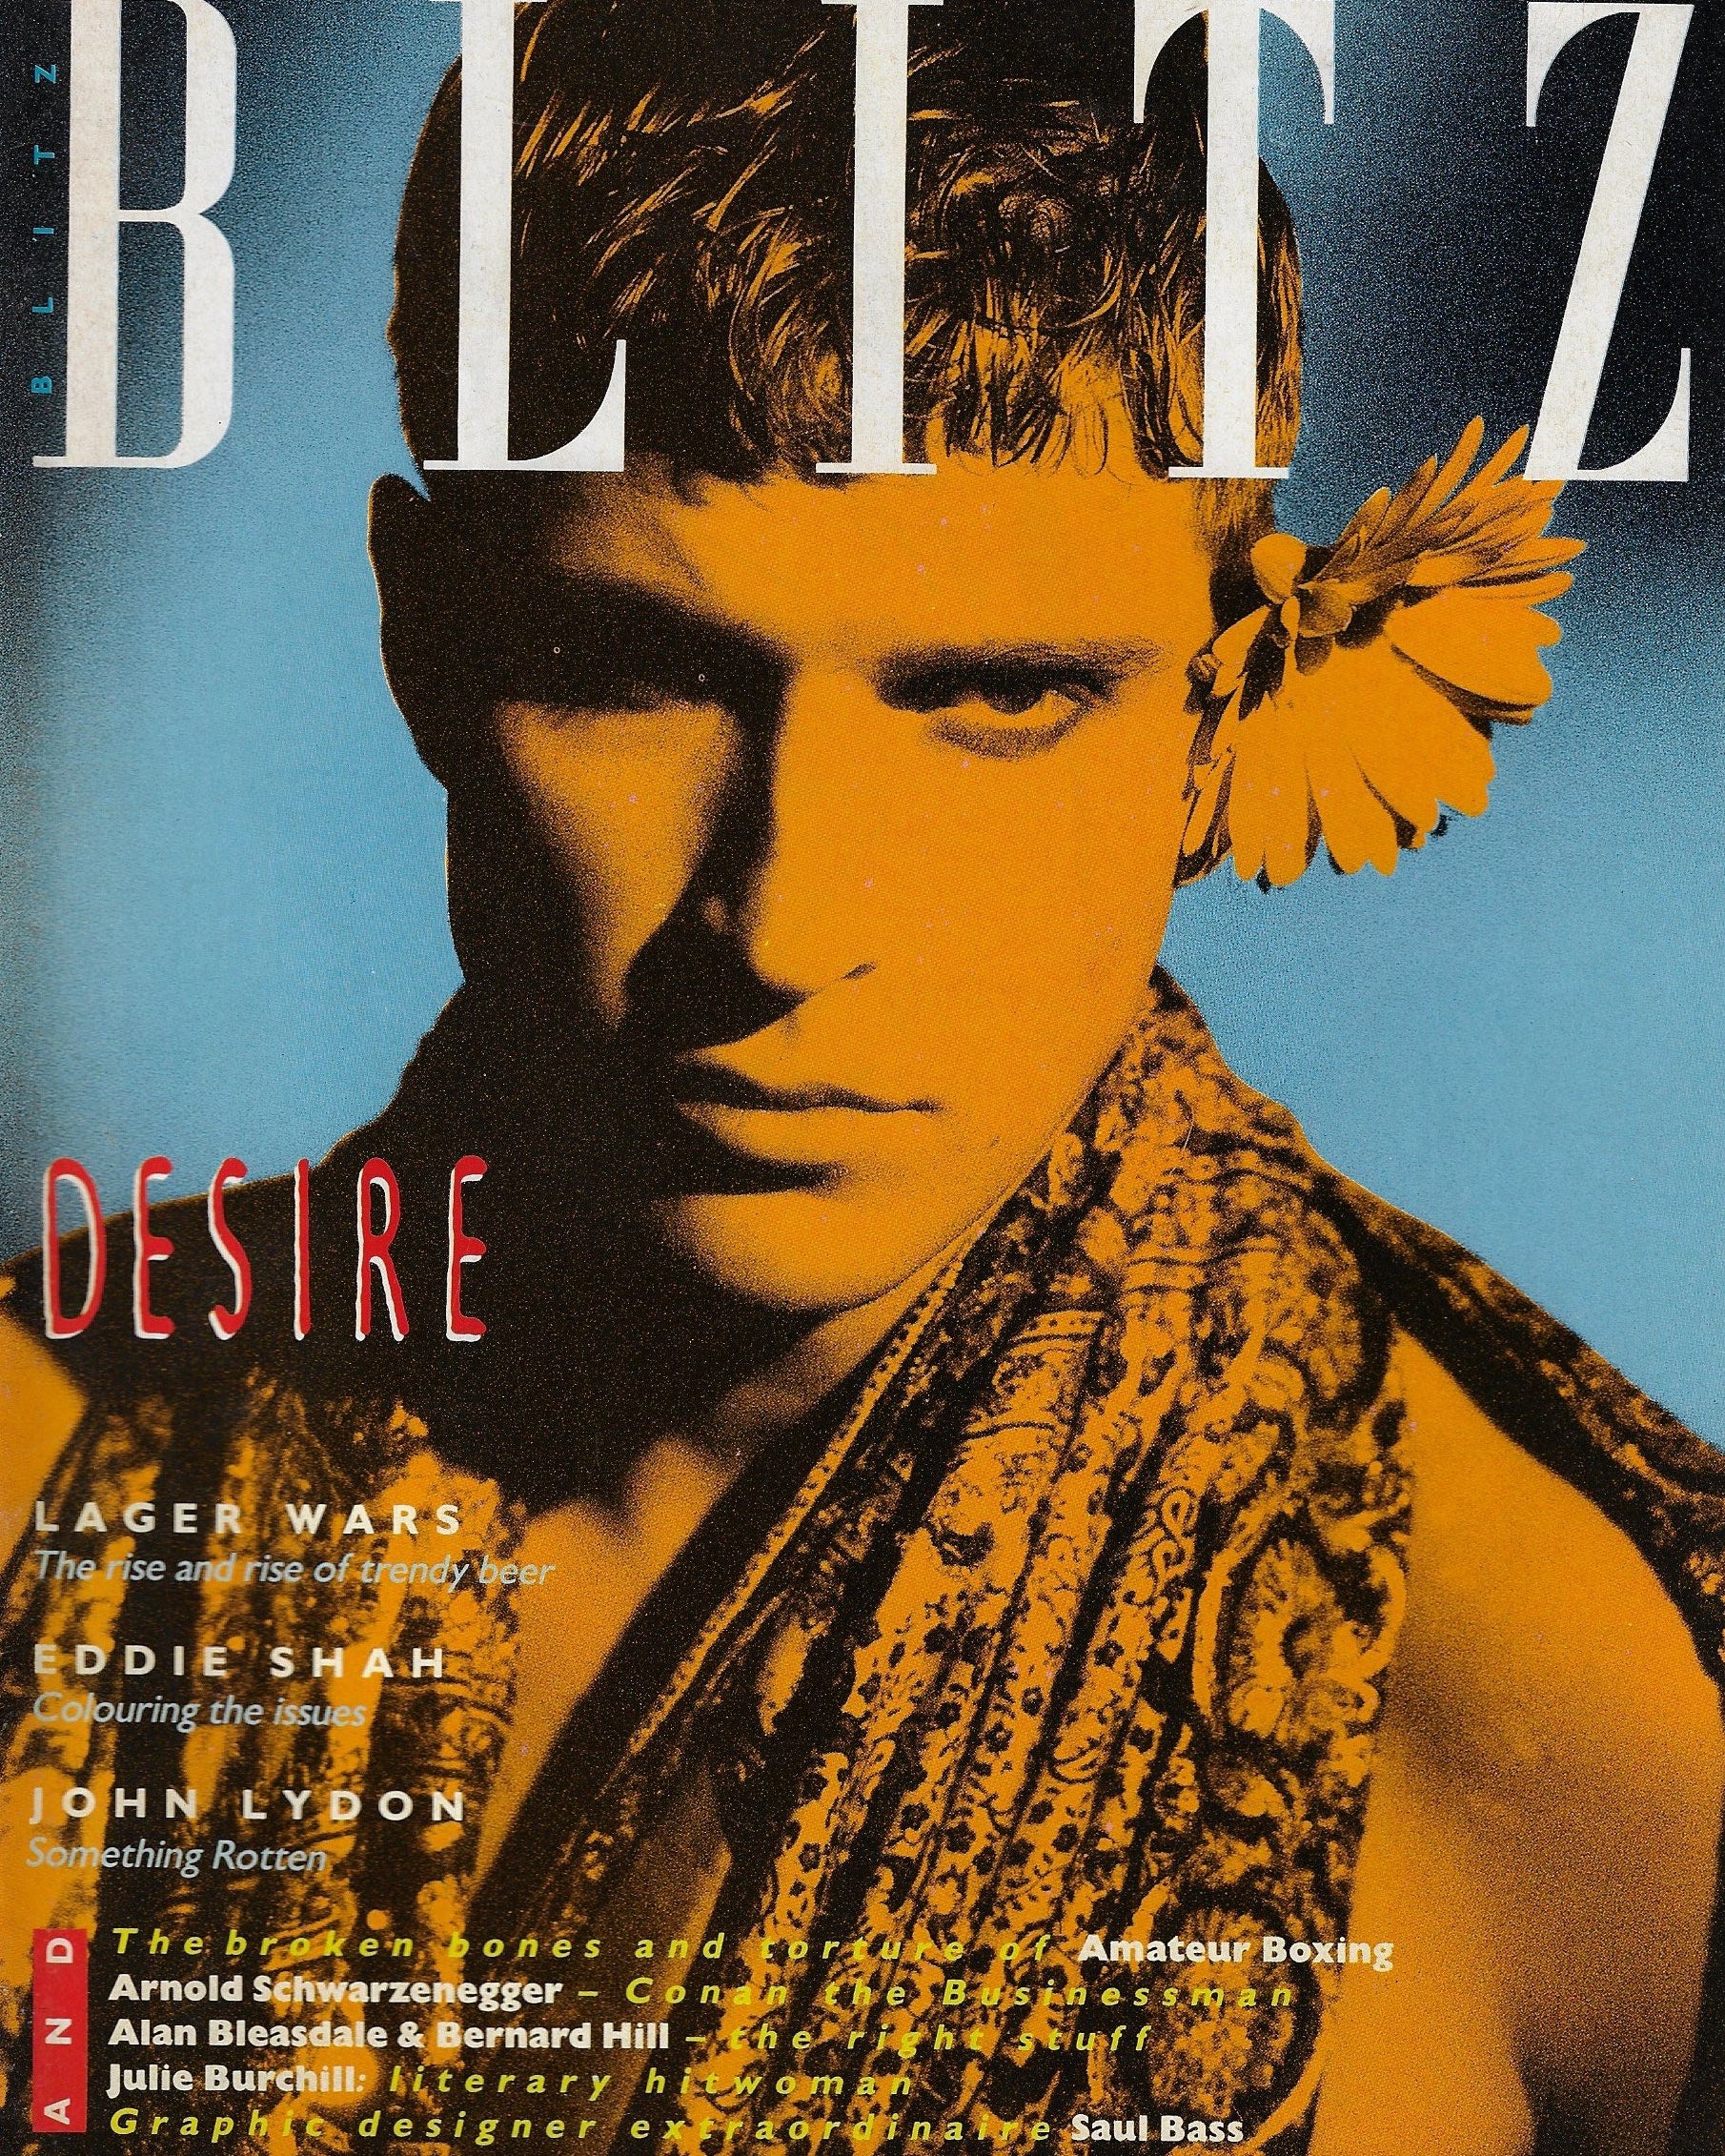 Blitz Magazine Archive Collection For Sale